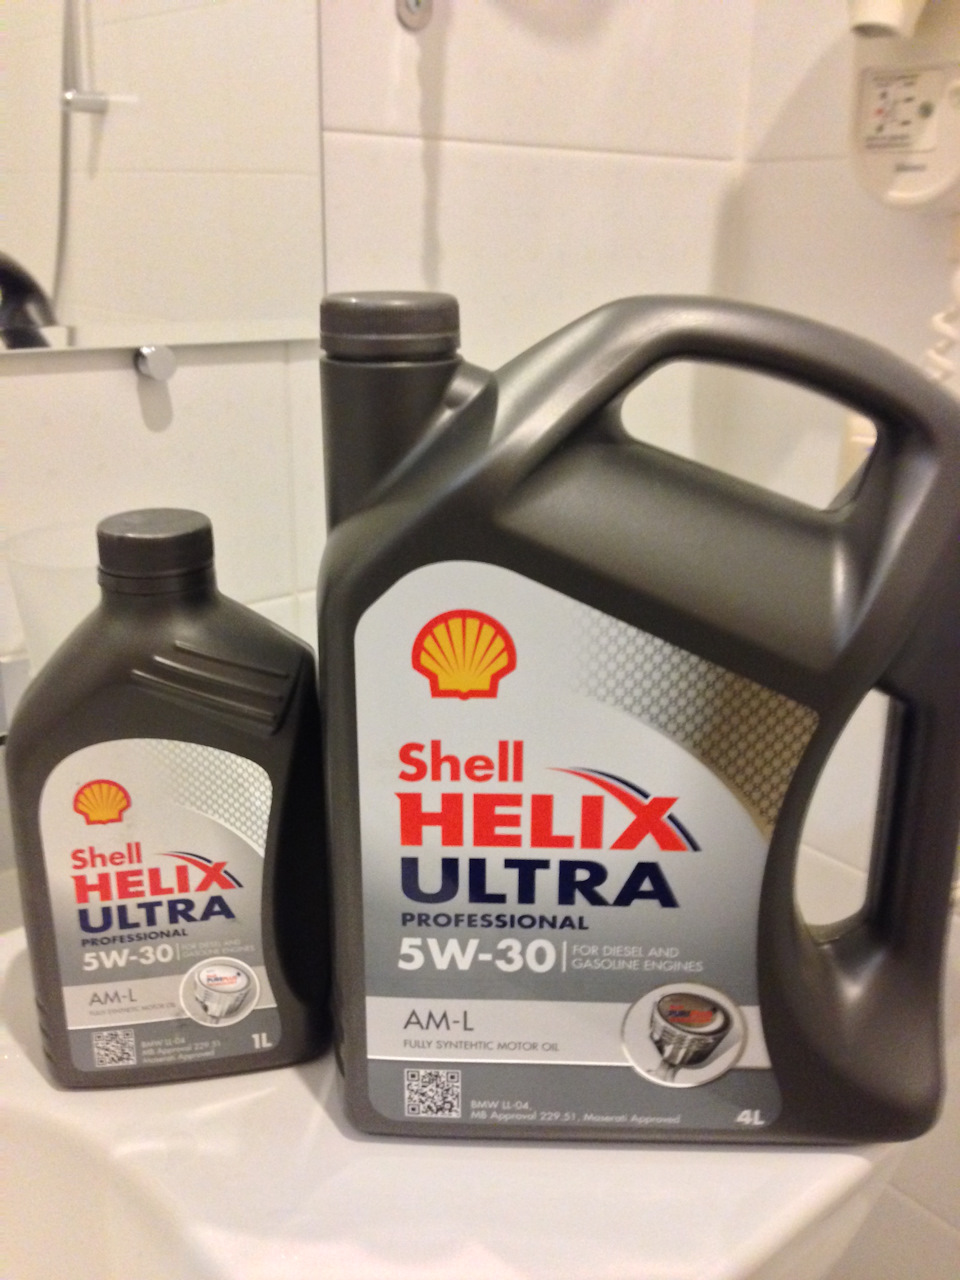 Shell ultra am l. Шелл Хеликс ультра профессионал 5w30. Shell Helix Ultra professional am-l 5w-30. Shell Helix Ultra professional am-l. Shell Helix Ultra 5w30 am-l.